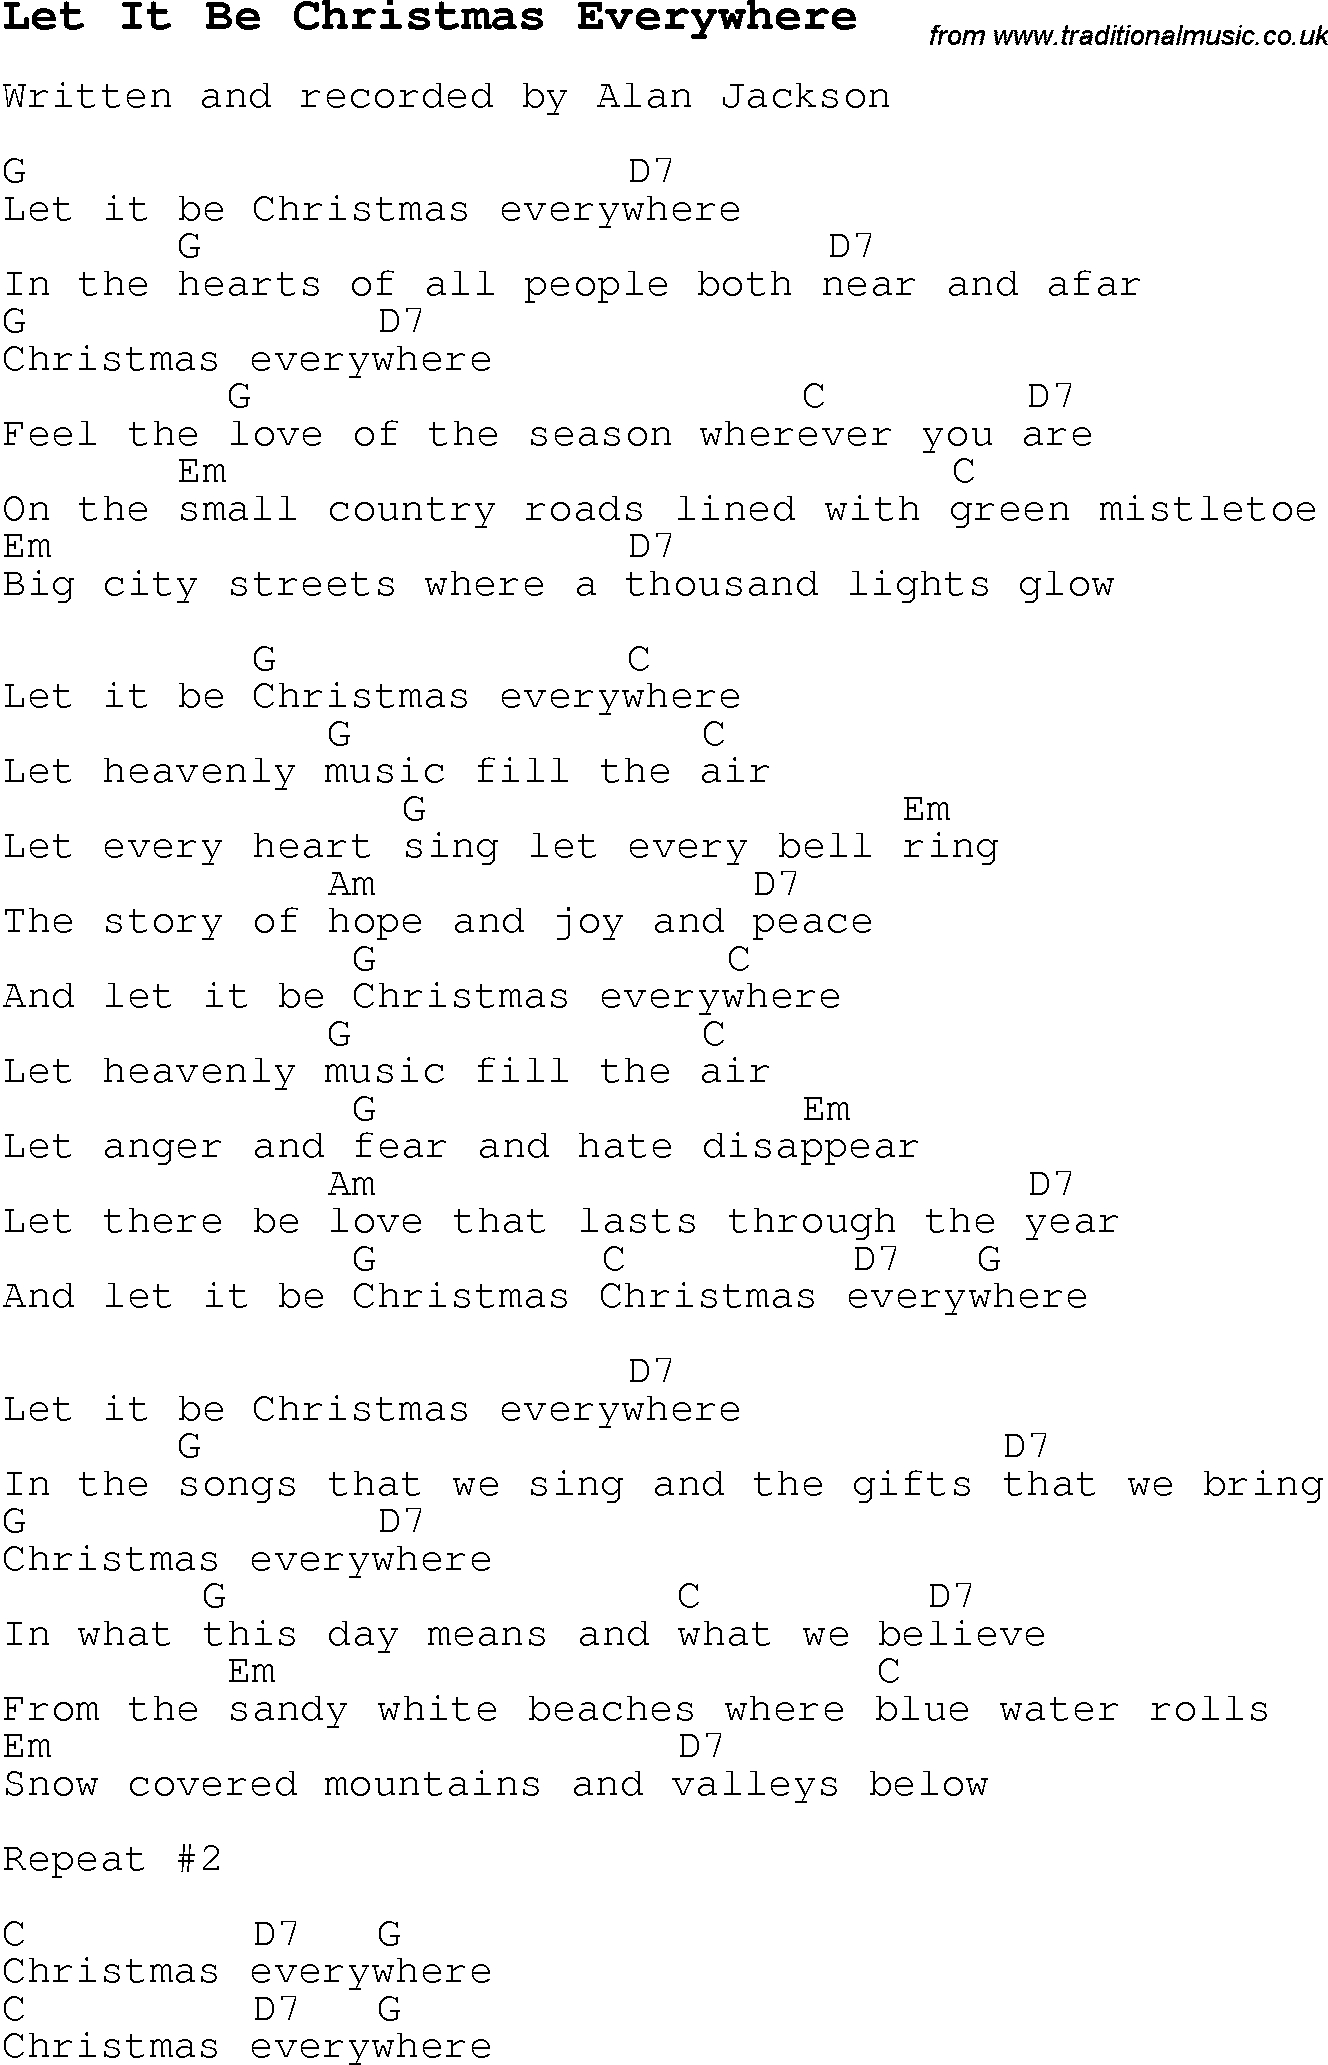 Let It Be Chords Christmas Carolsong Lyrics With Chords For Let It Be Christmas